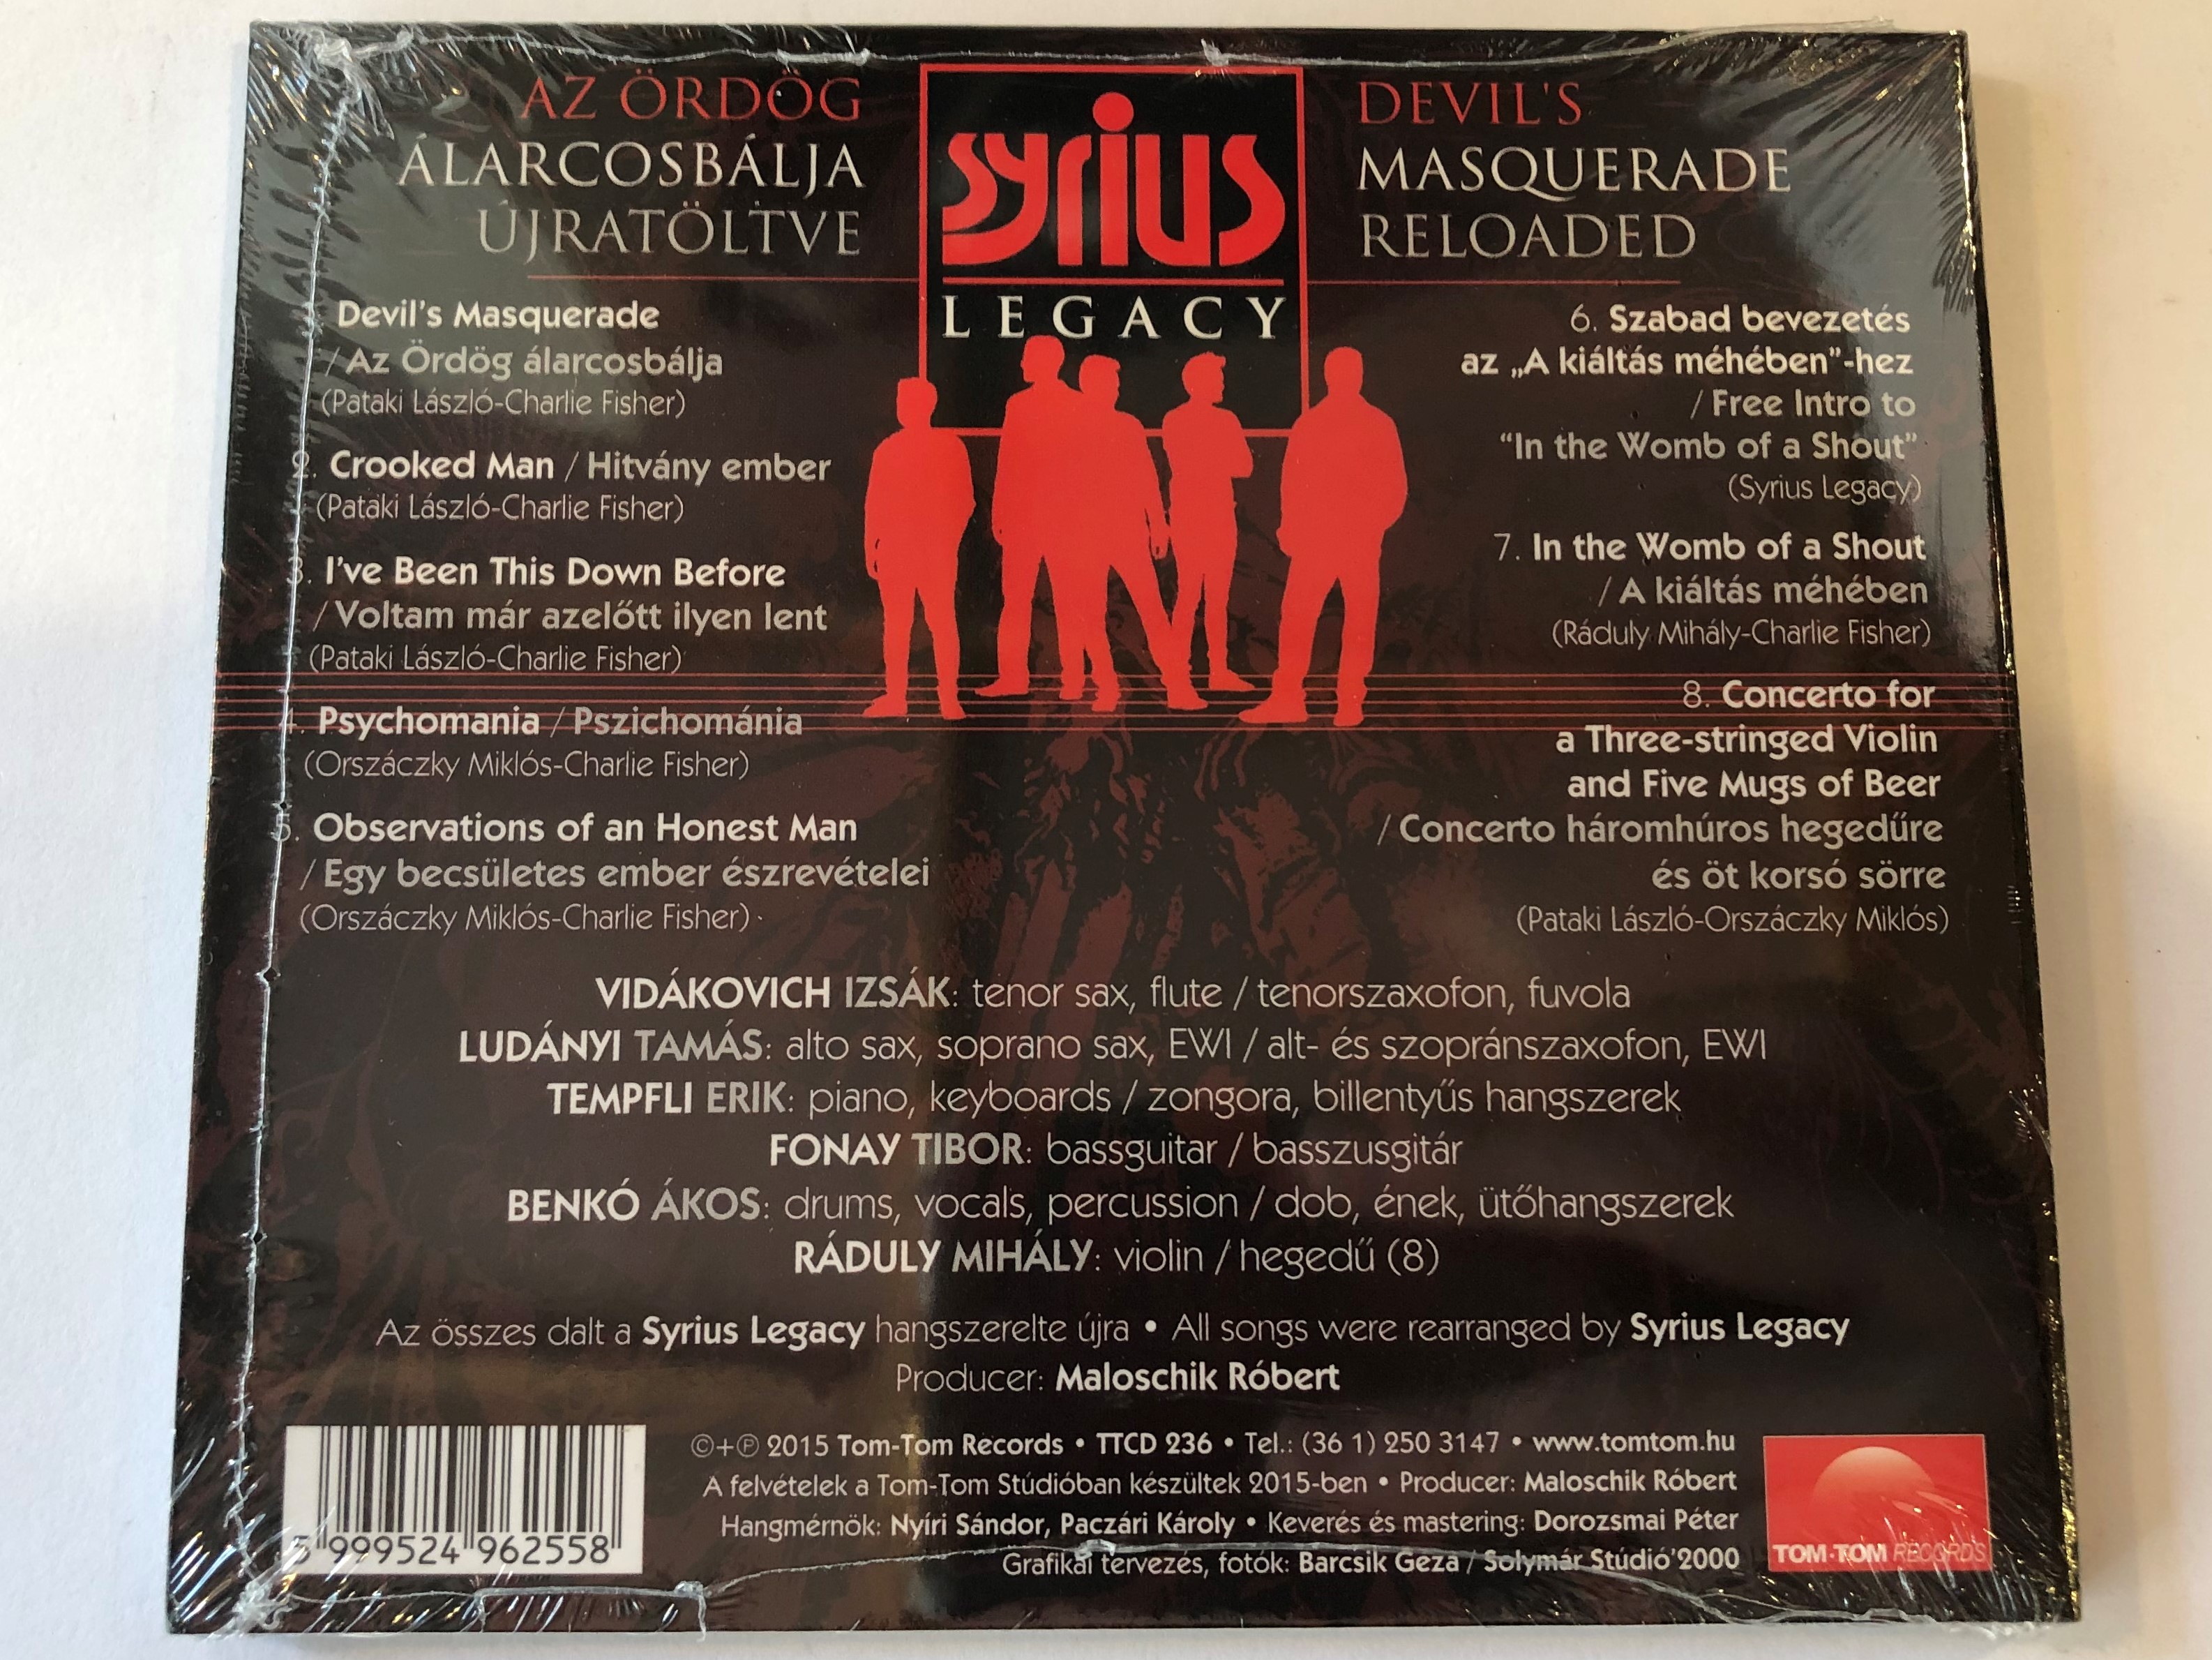 syrius-legacy-devil-s-masquerade-reloaded-az-ordog-alarcosbalja-ujartoltve-tom-tom-records-audio-cd-2015-ttcd-236-2-.jpg